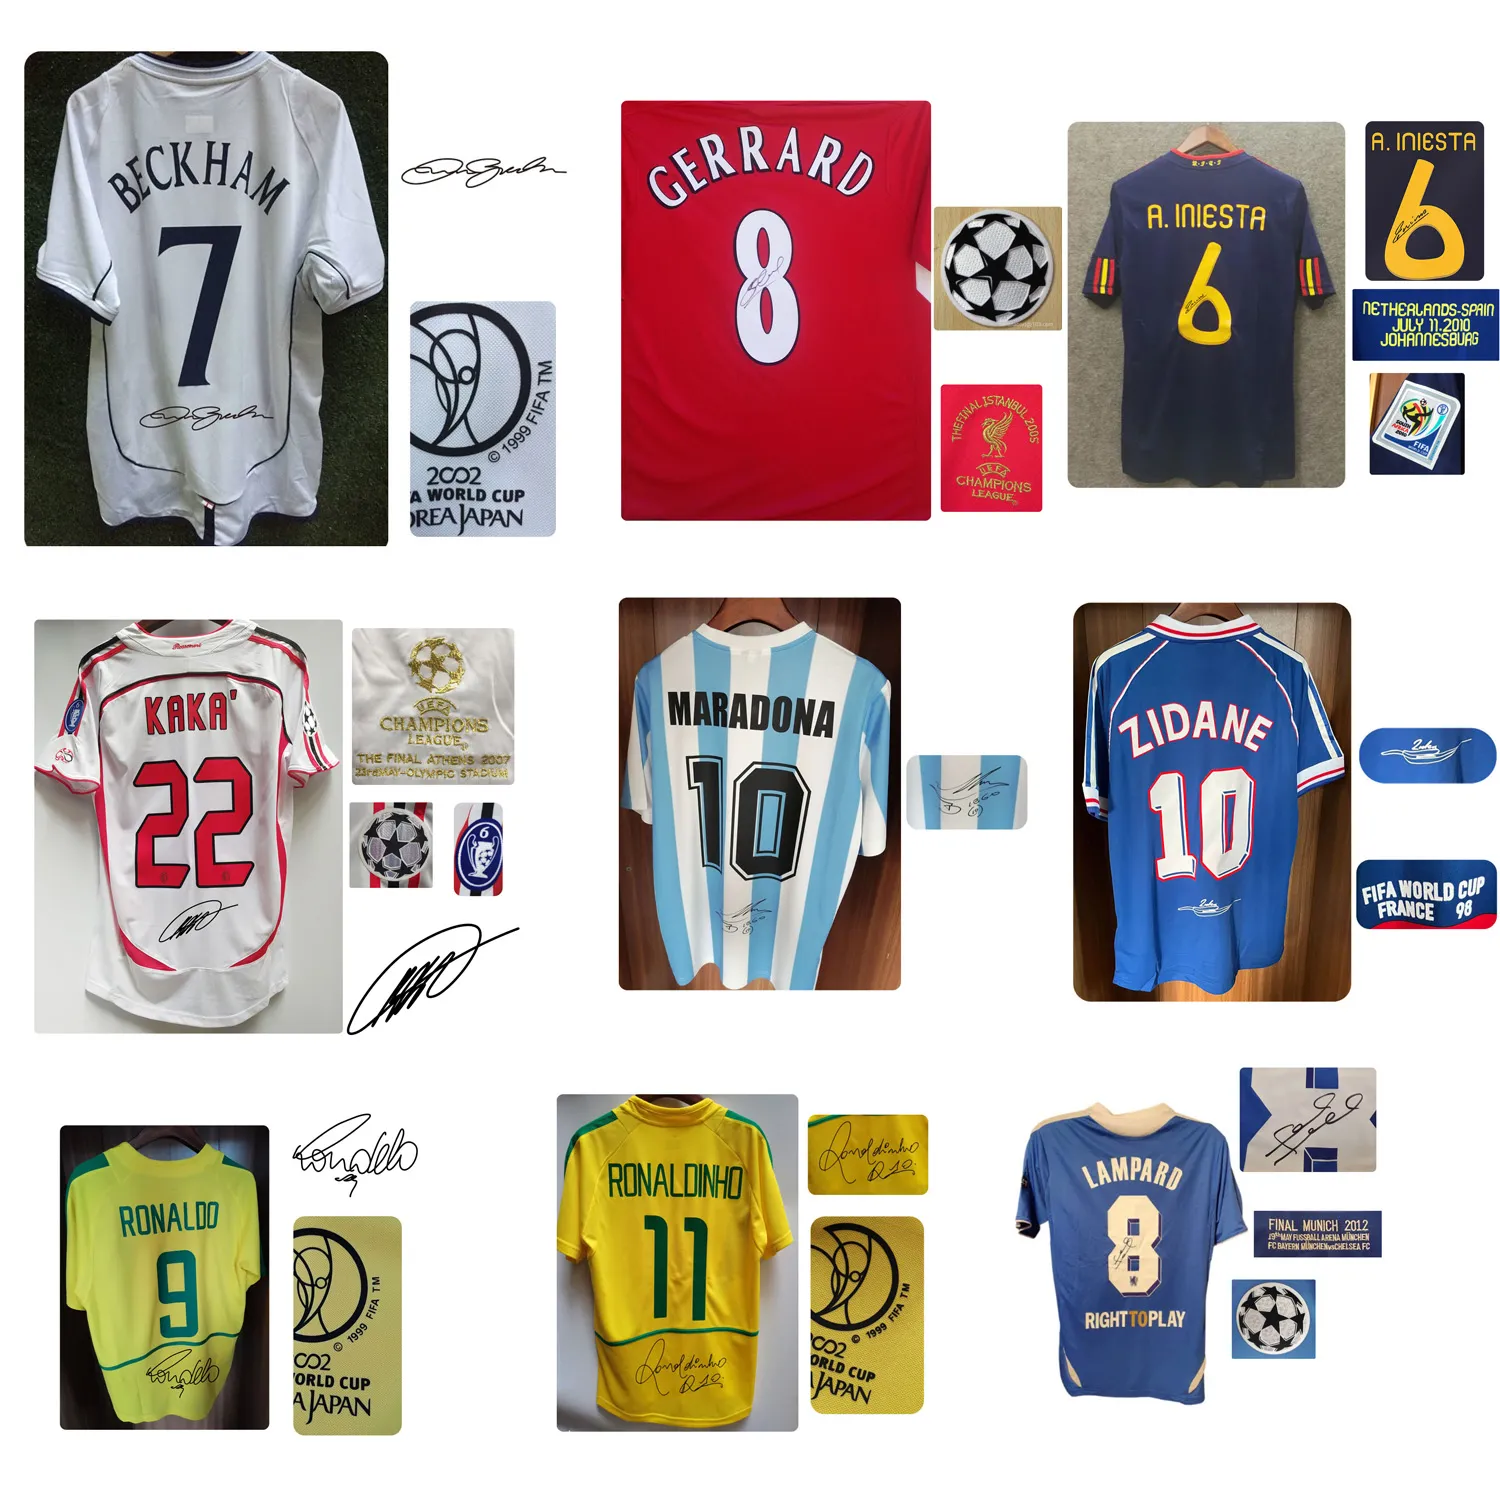 American College Football Wear 모든 슈퍼 스타 서명 저지 Maradona Baggio Beckham 시그니처 셔츠 Retro Kaka Gerrard Lampard Ronaldo 클래식 빈티지 유니폼